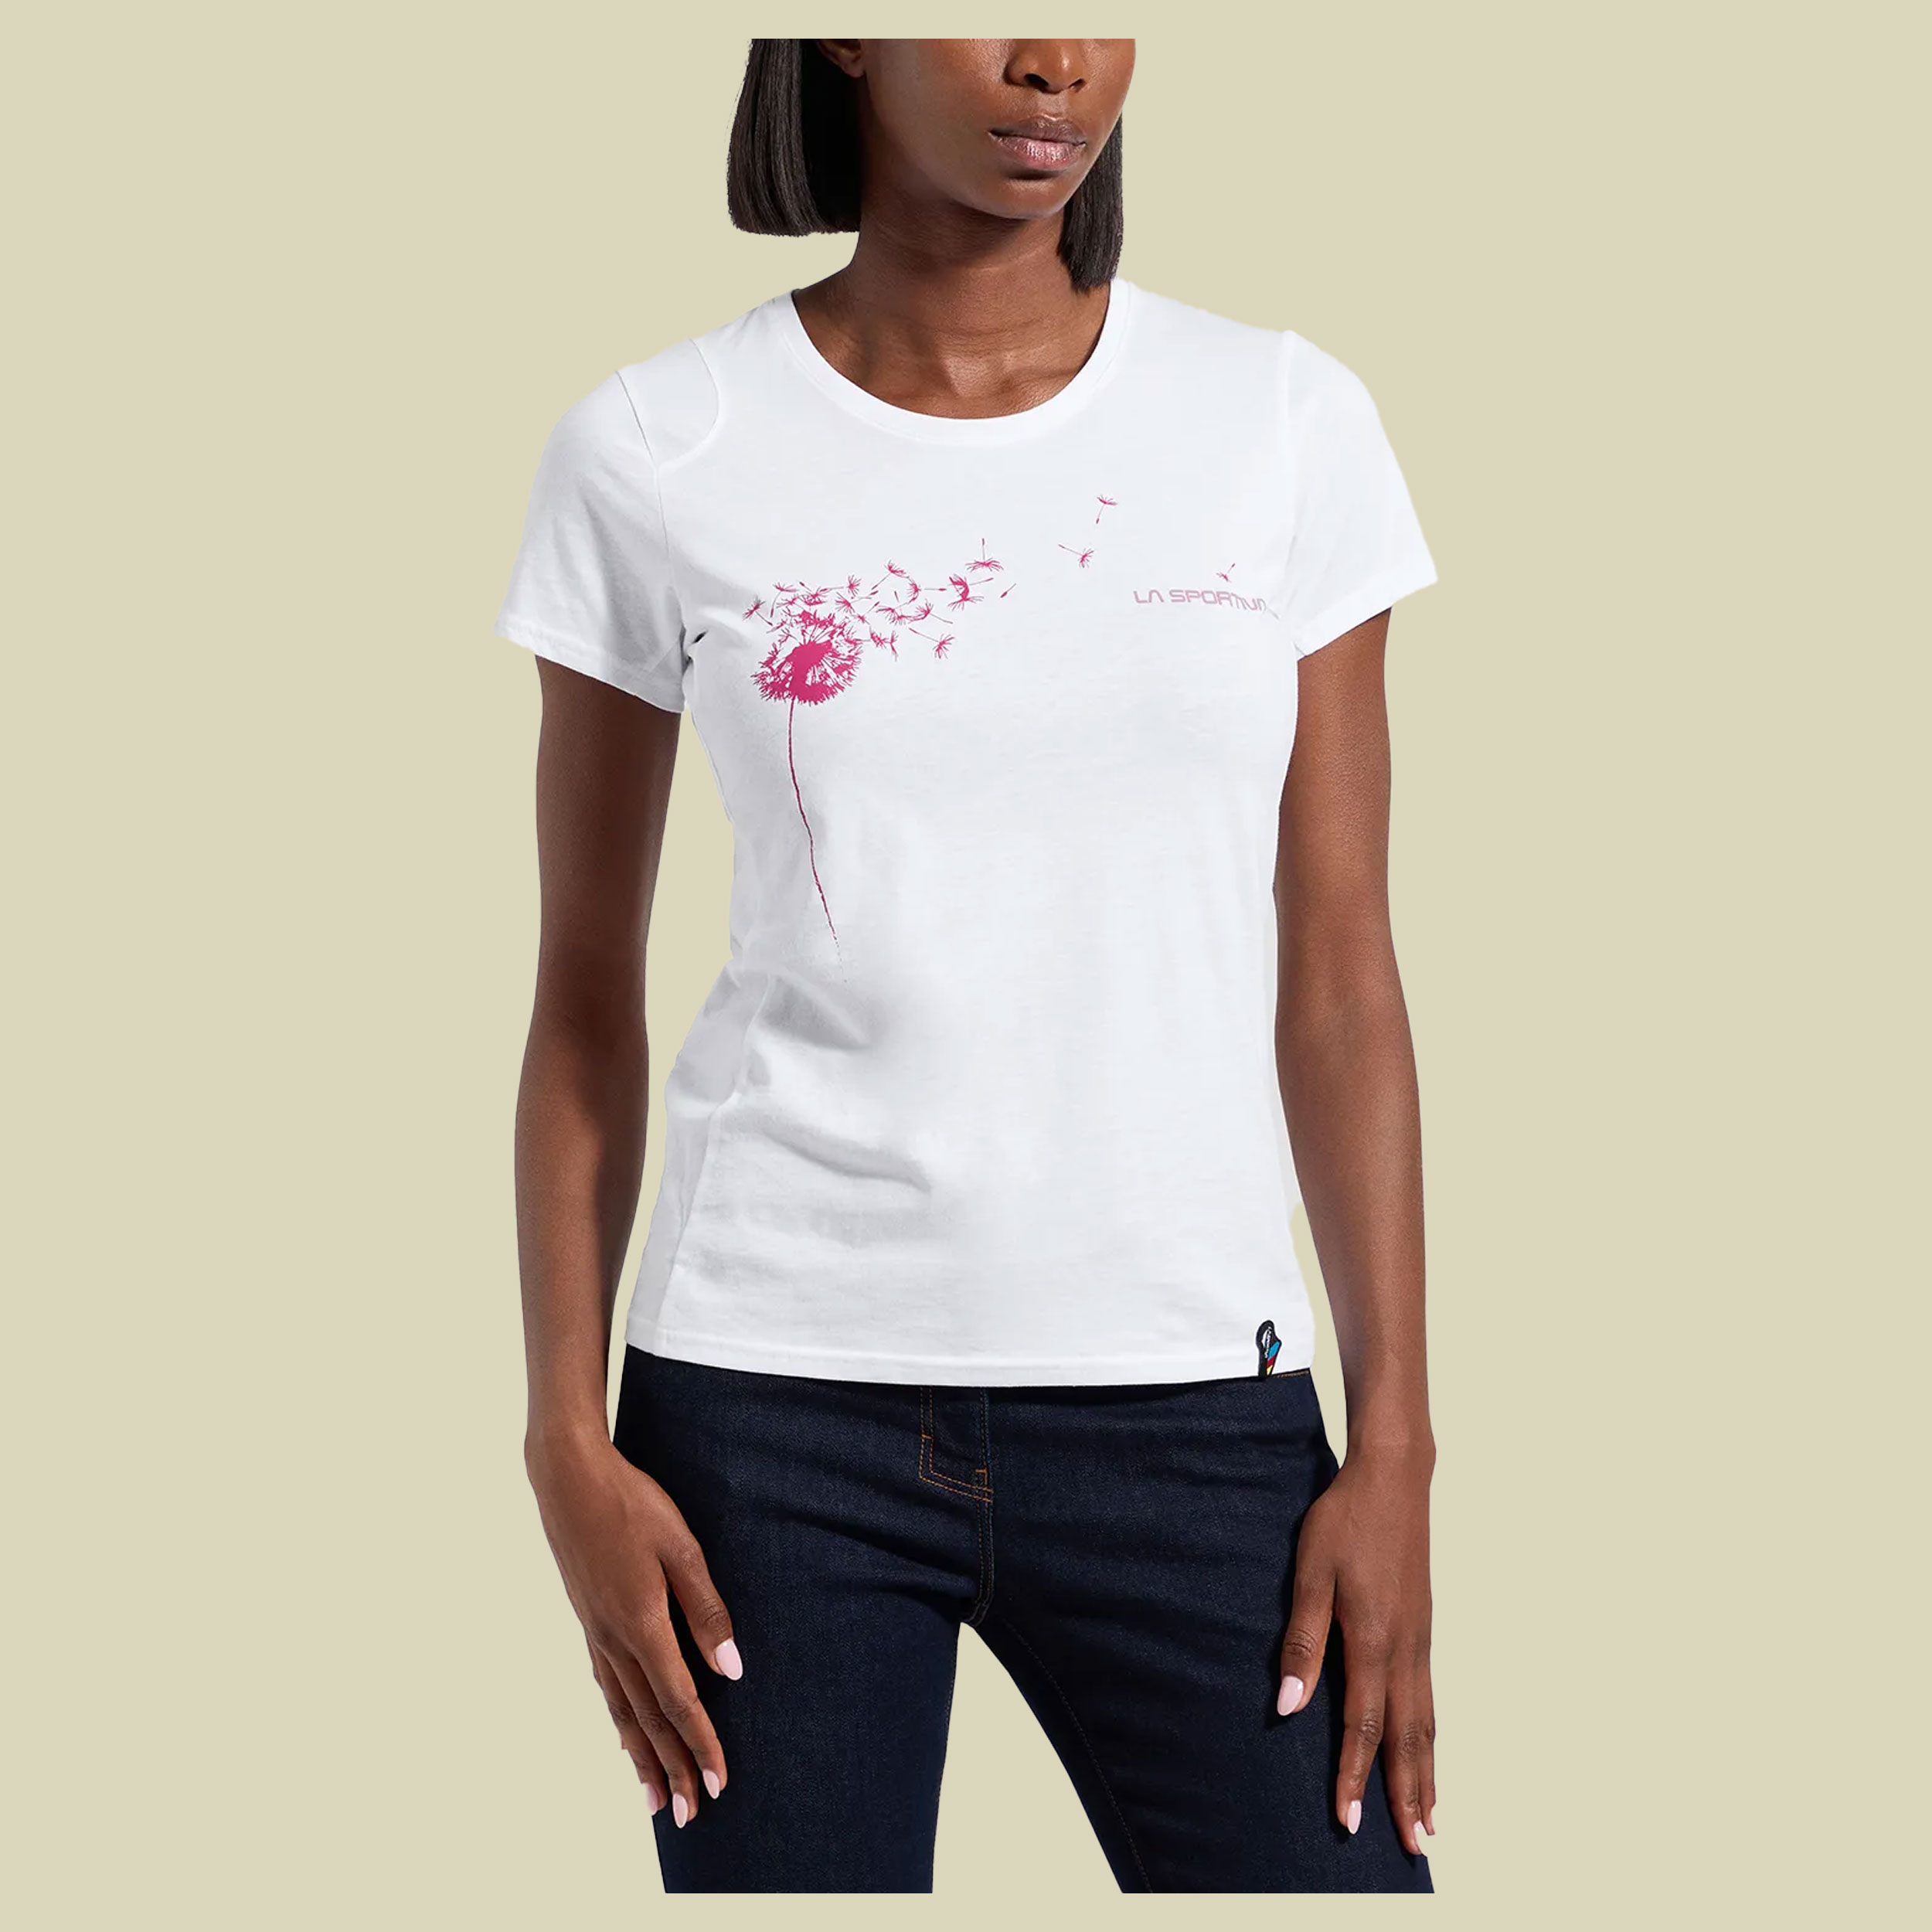 Windy T-Shirt Women S weiß - white/rose